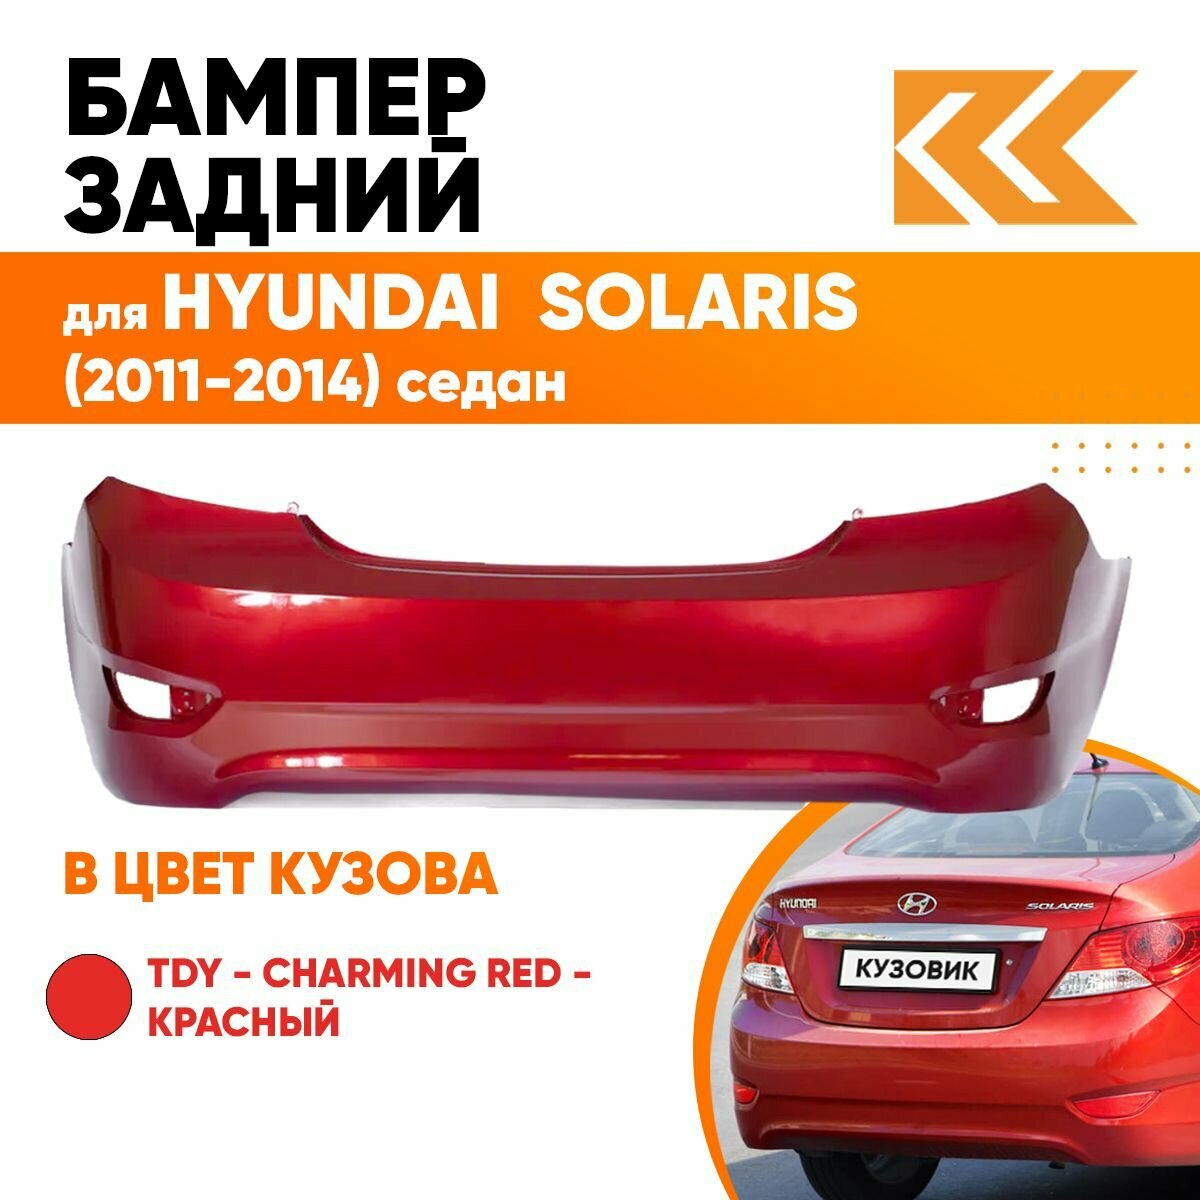 Бампер задний в цвет кузова Hyundai Solaris 1 Хендай Солярис RHM - SLEEK SILVER - Серебристый